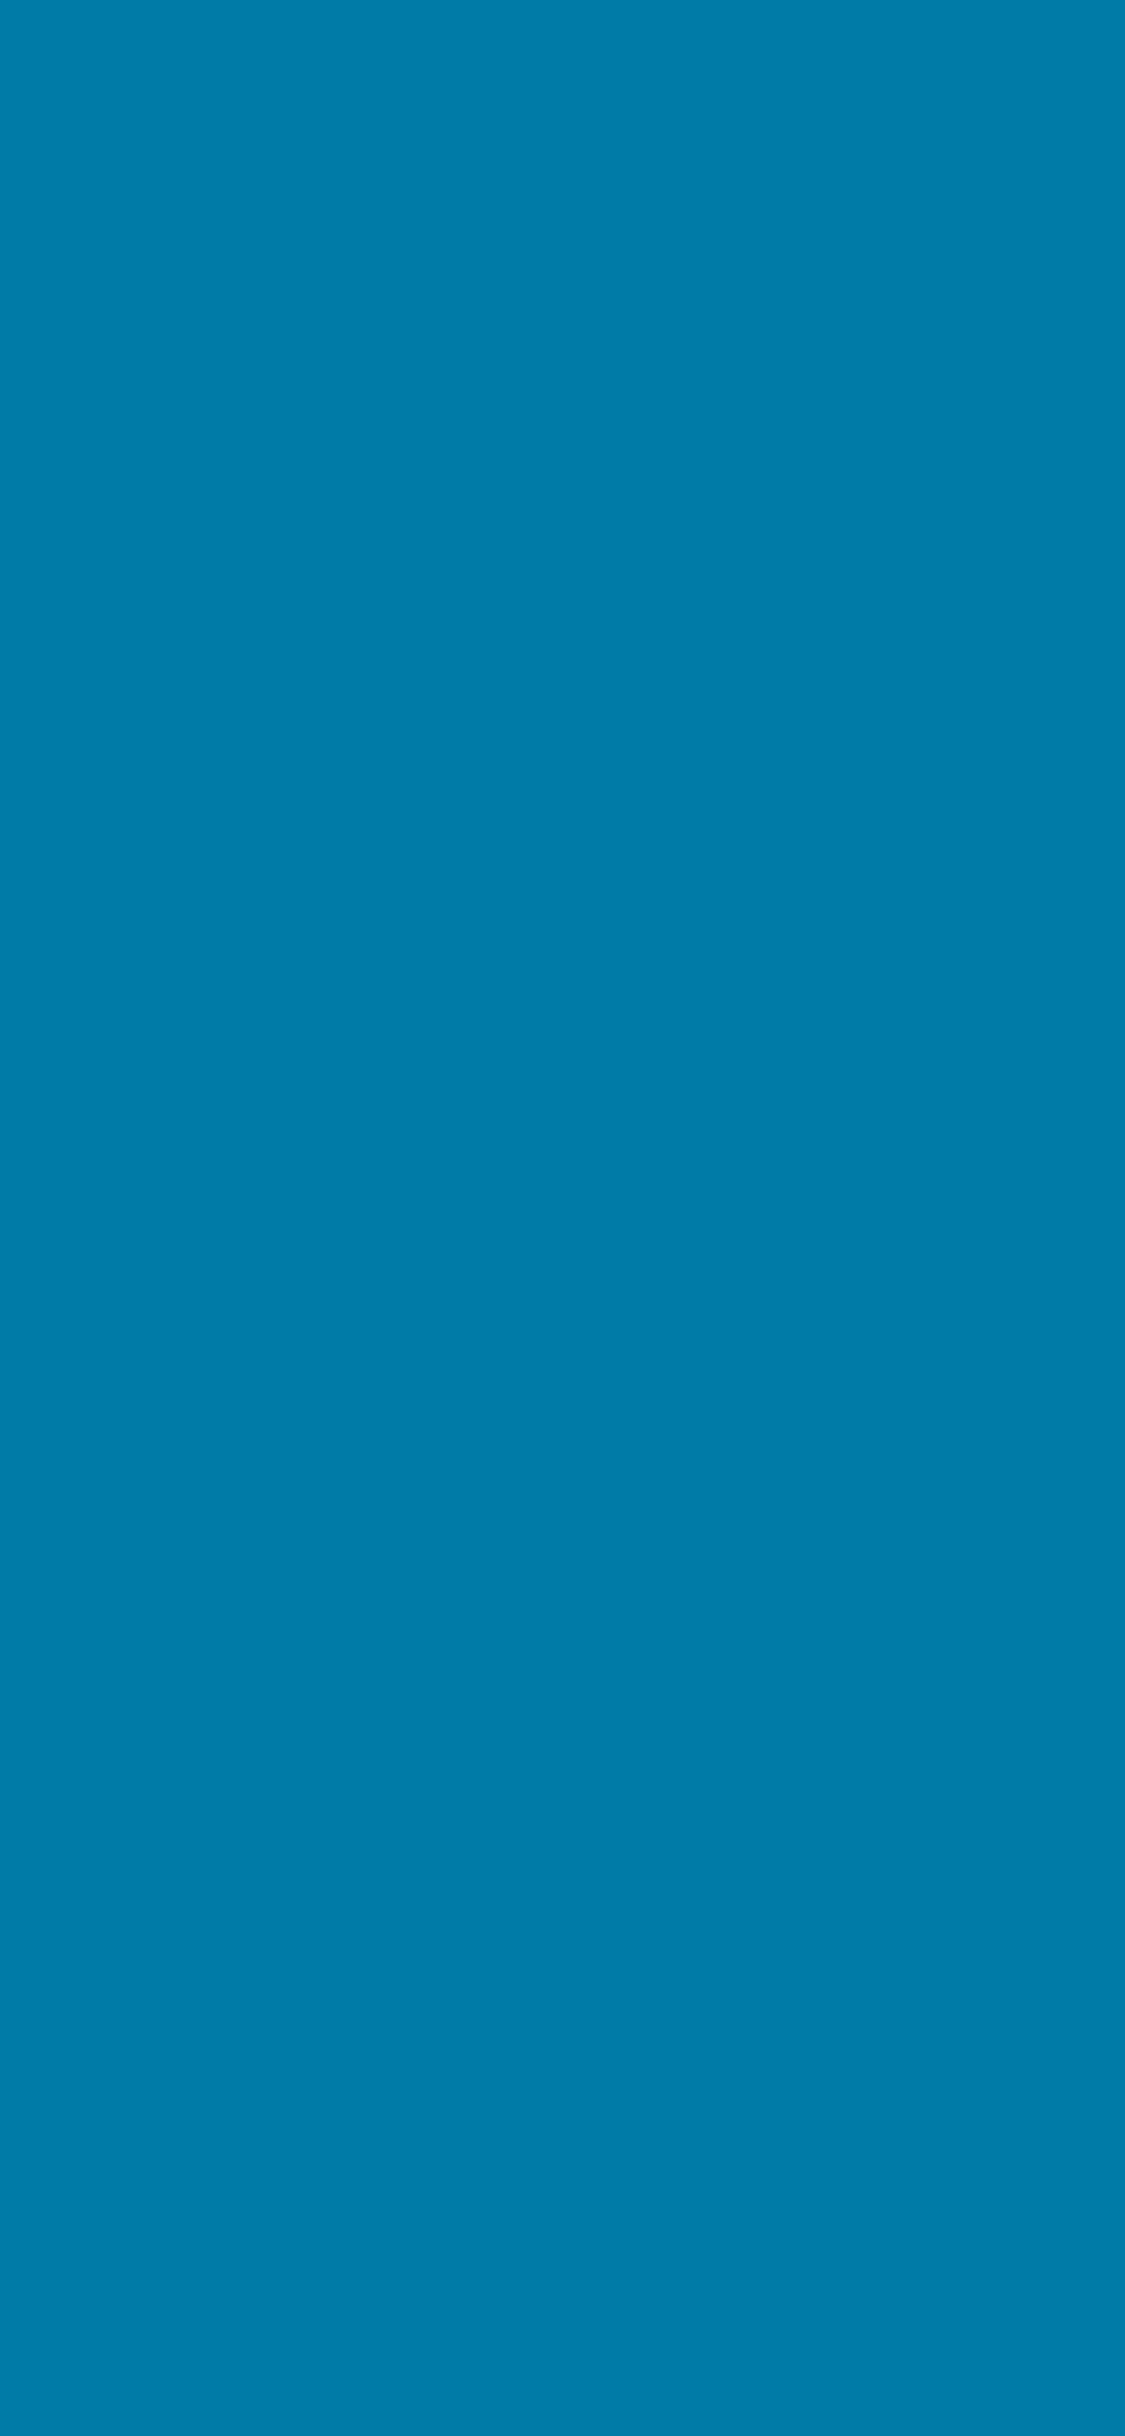 1125x2436 Celadon Blue Solid Color Background